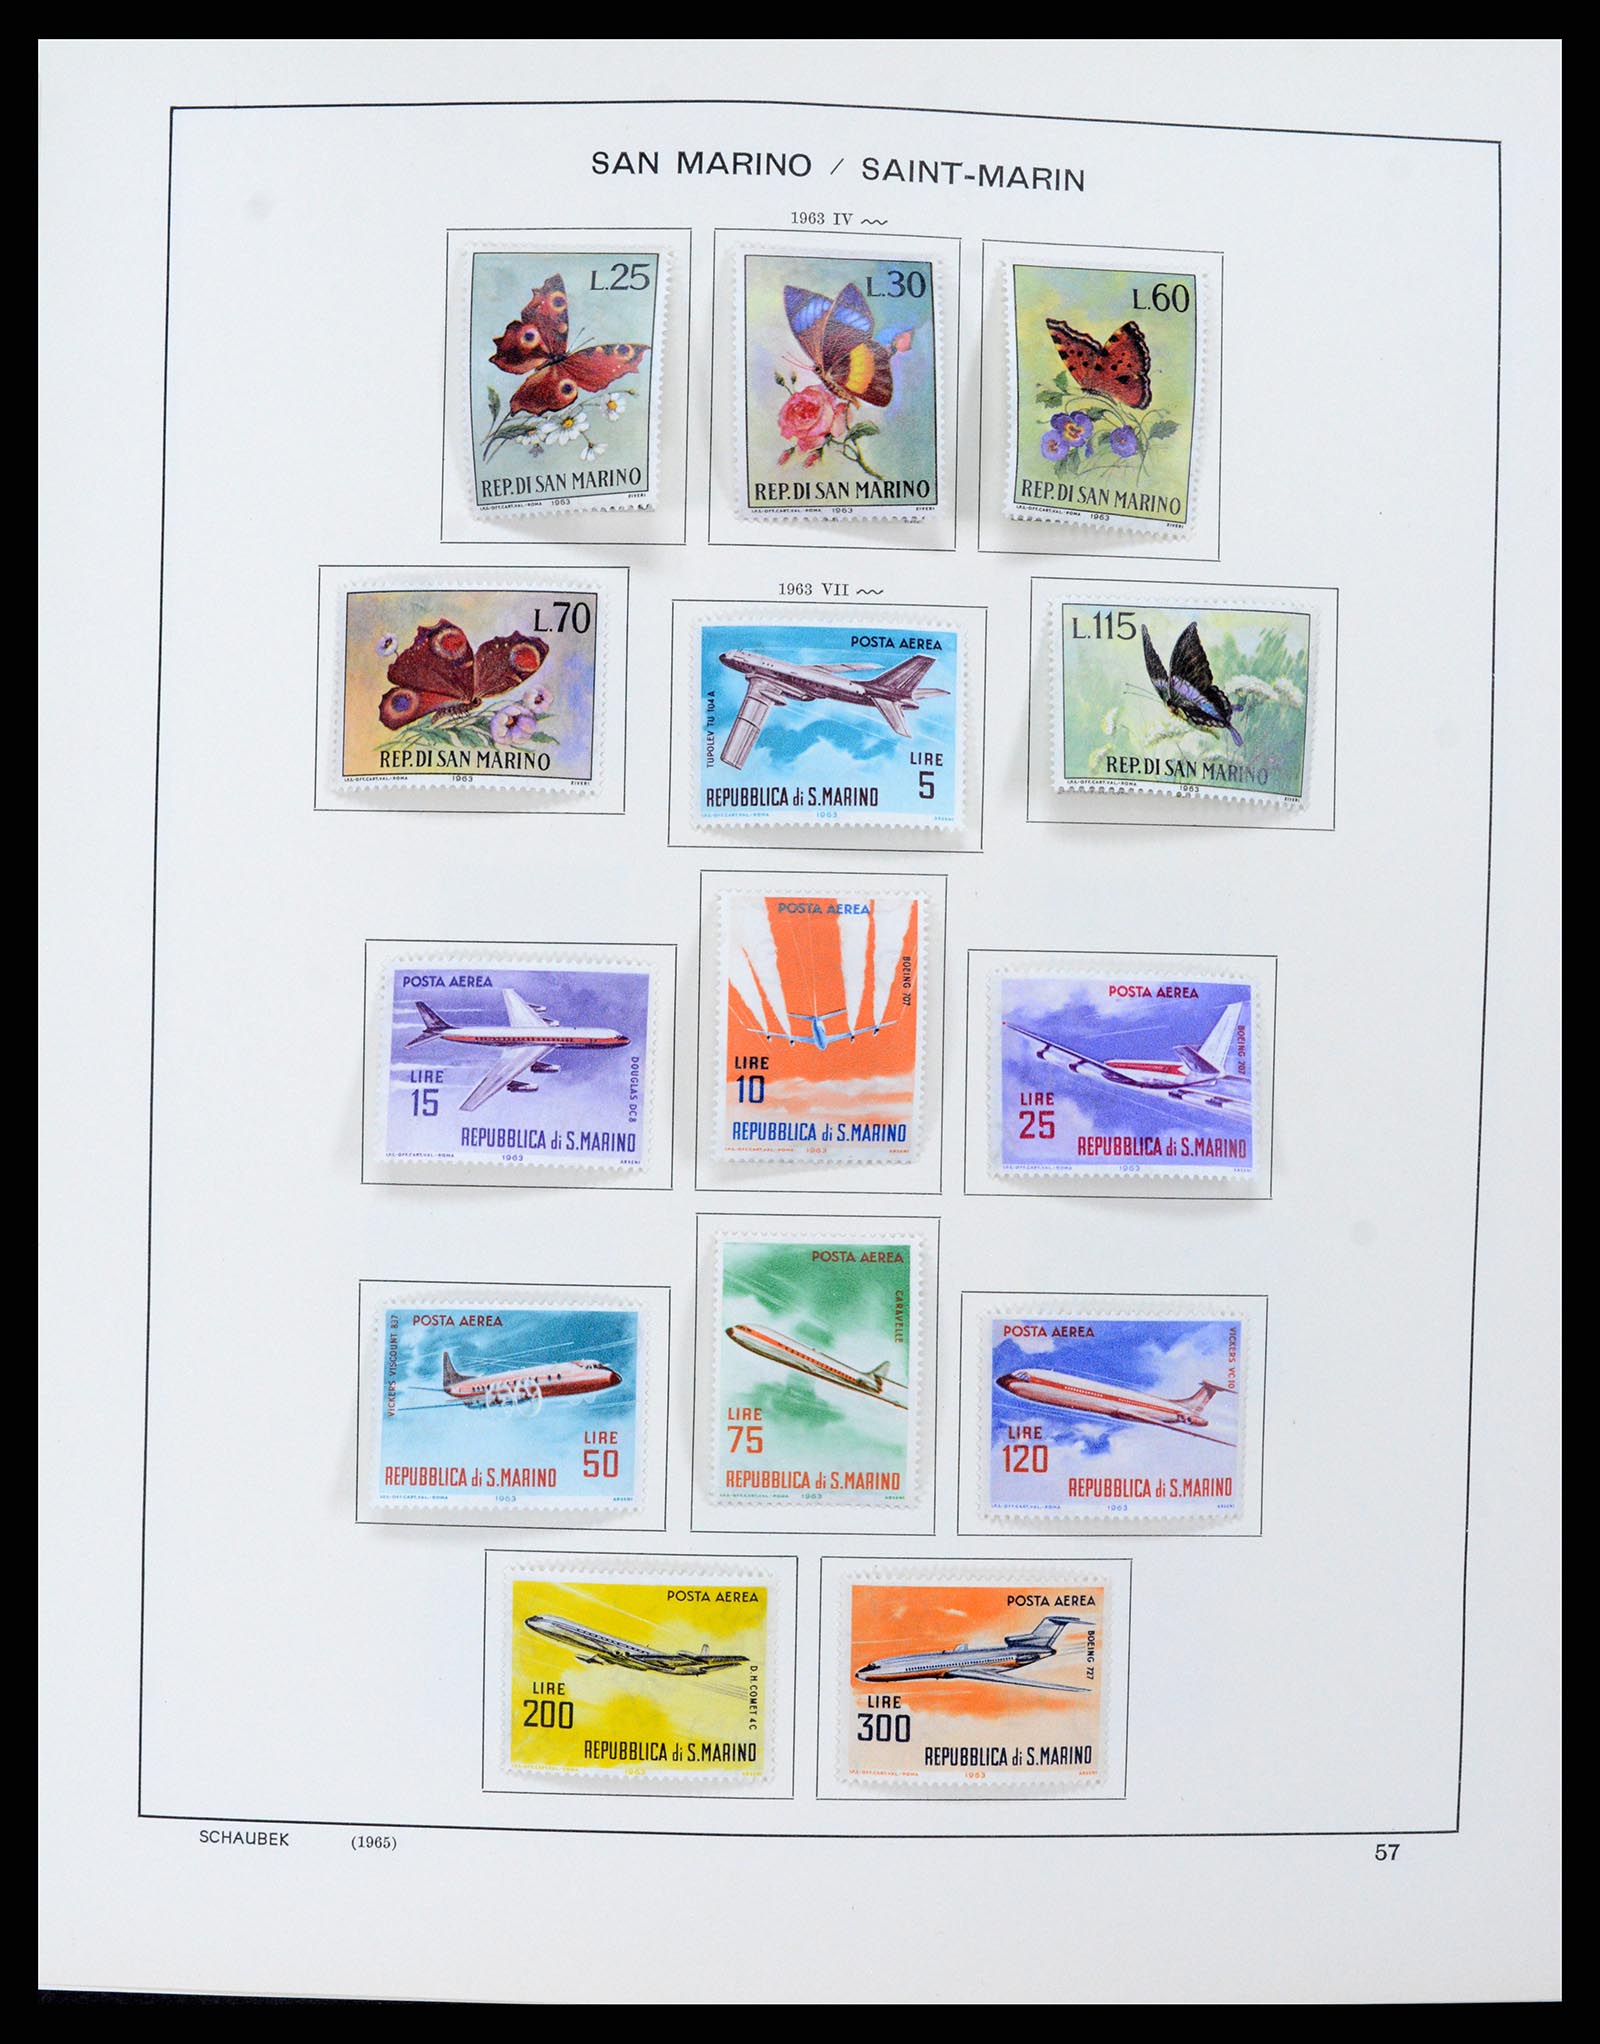 37556 060 - Stamp collection 37556 San Marino 1877-2017.